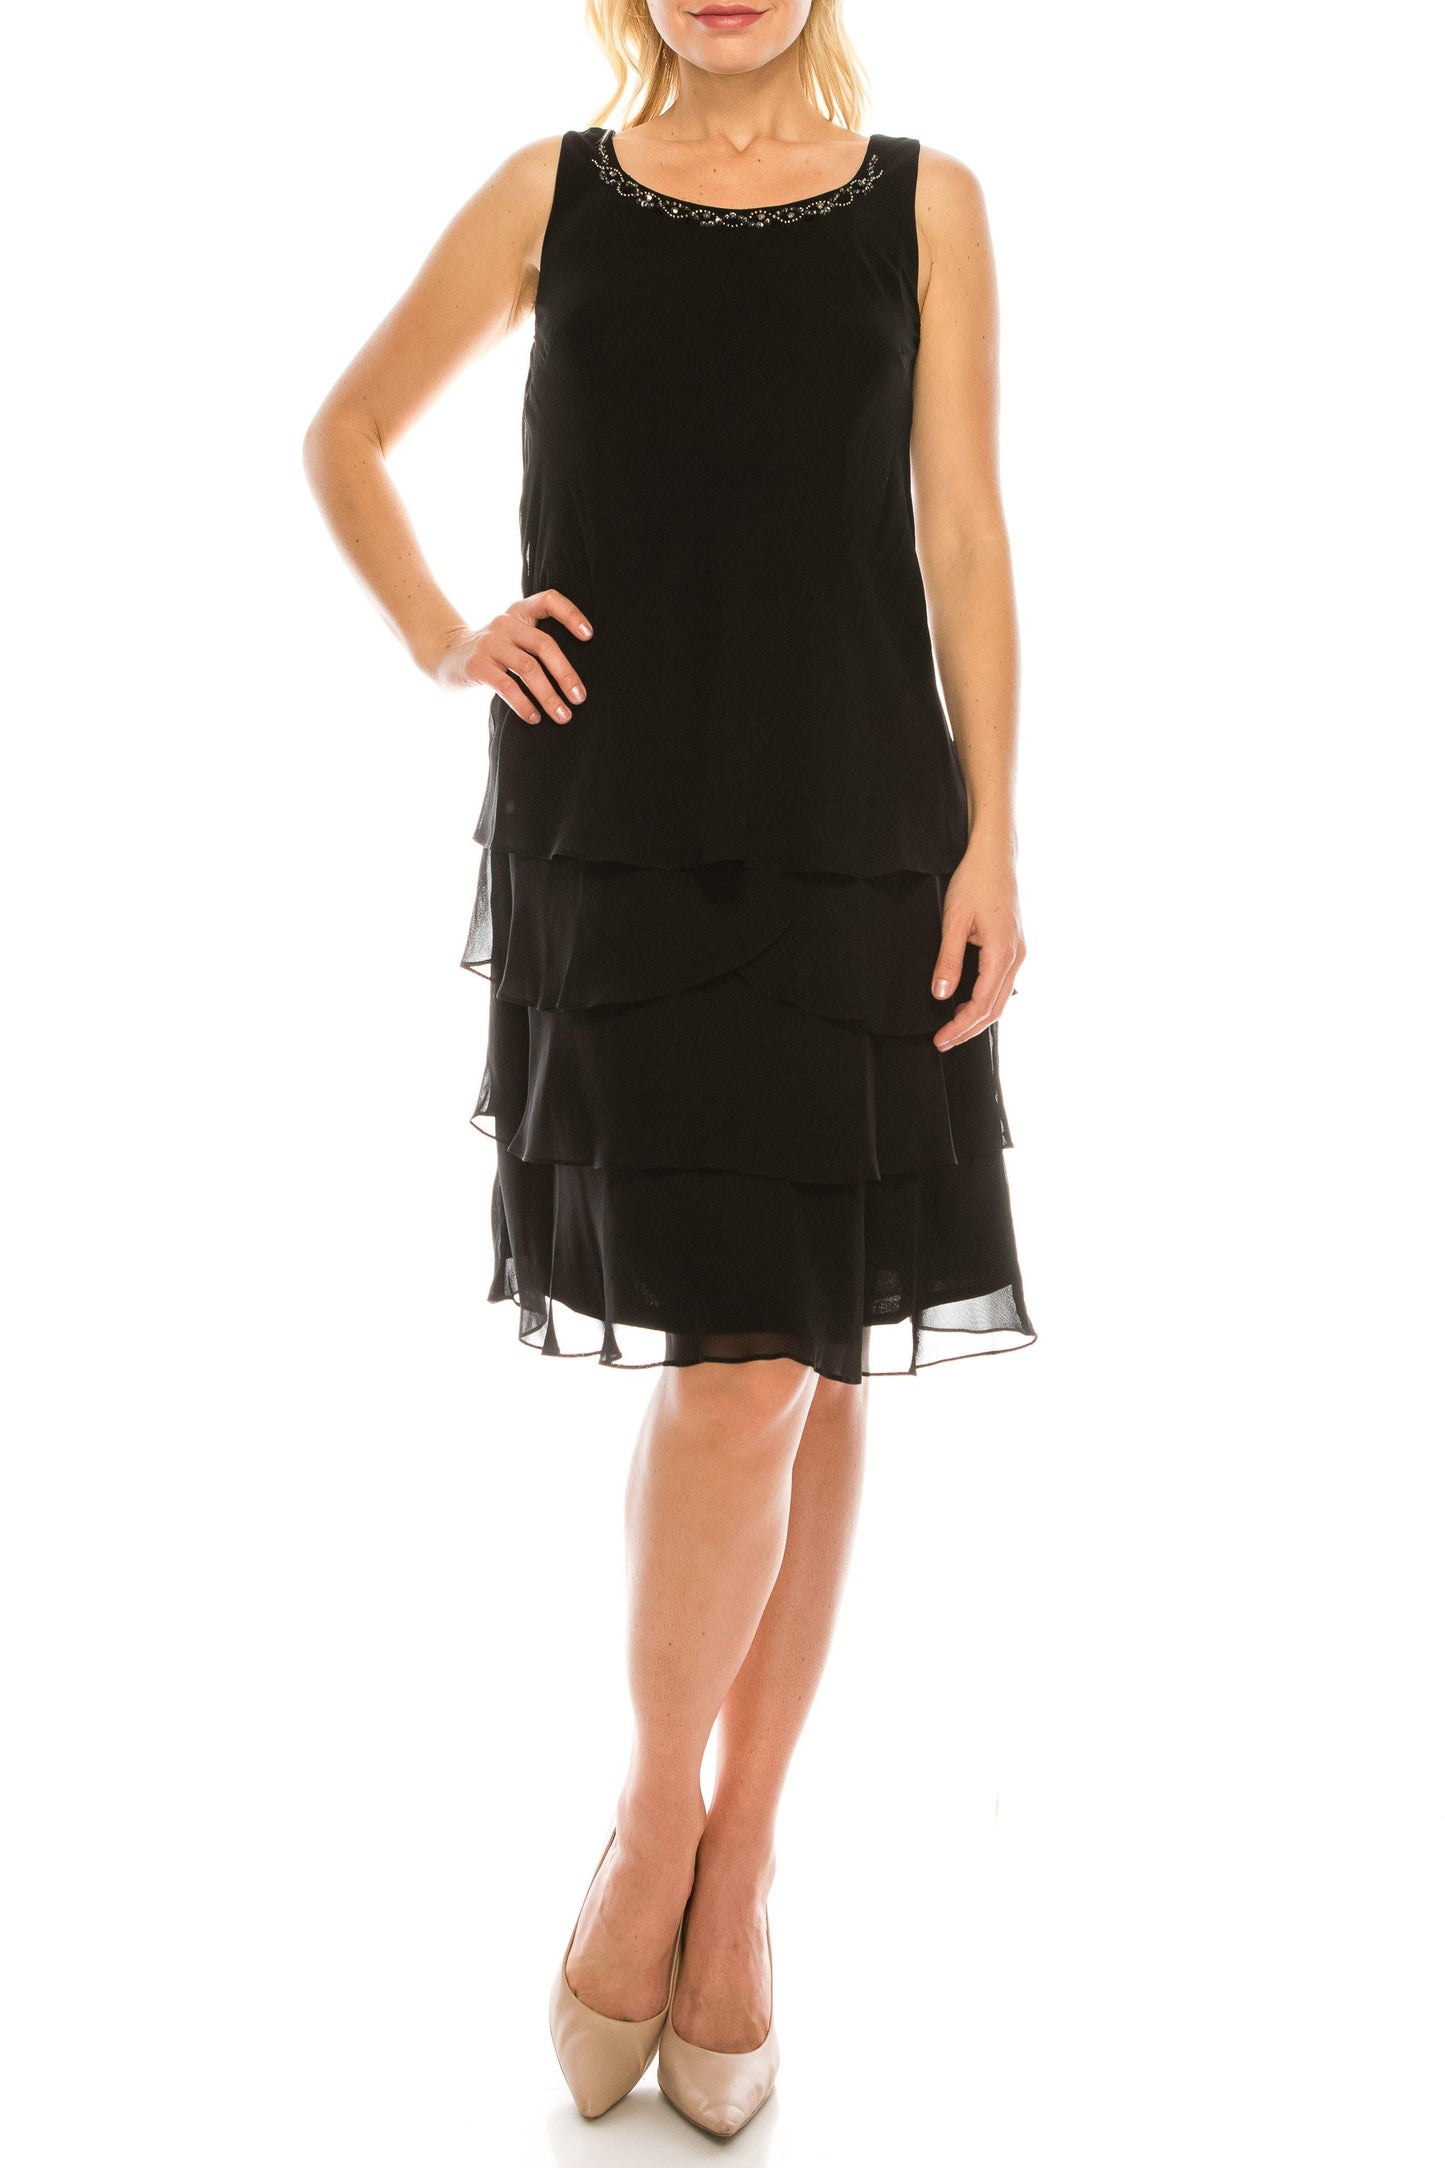 SLNY Short Plus Size Evening Jacket Dress - The Dress Outlet